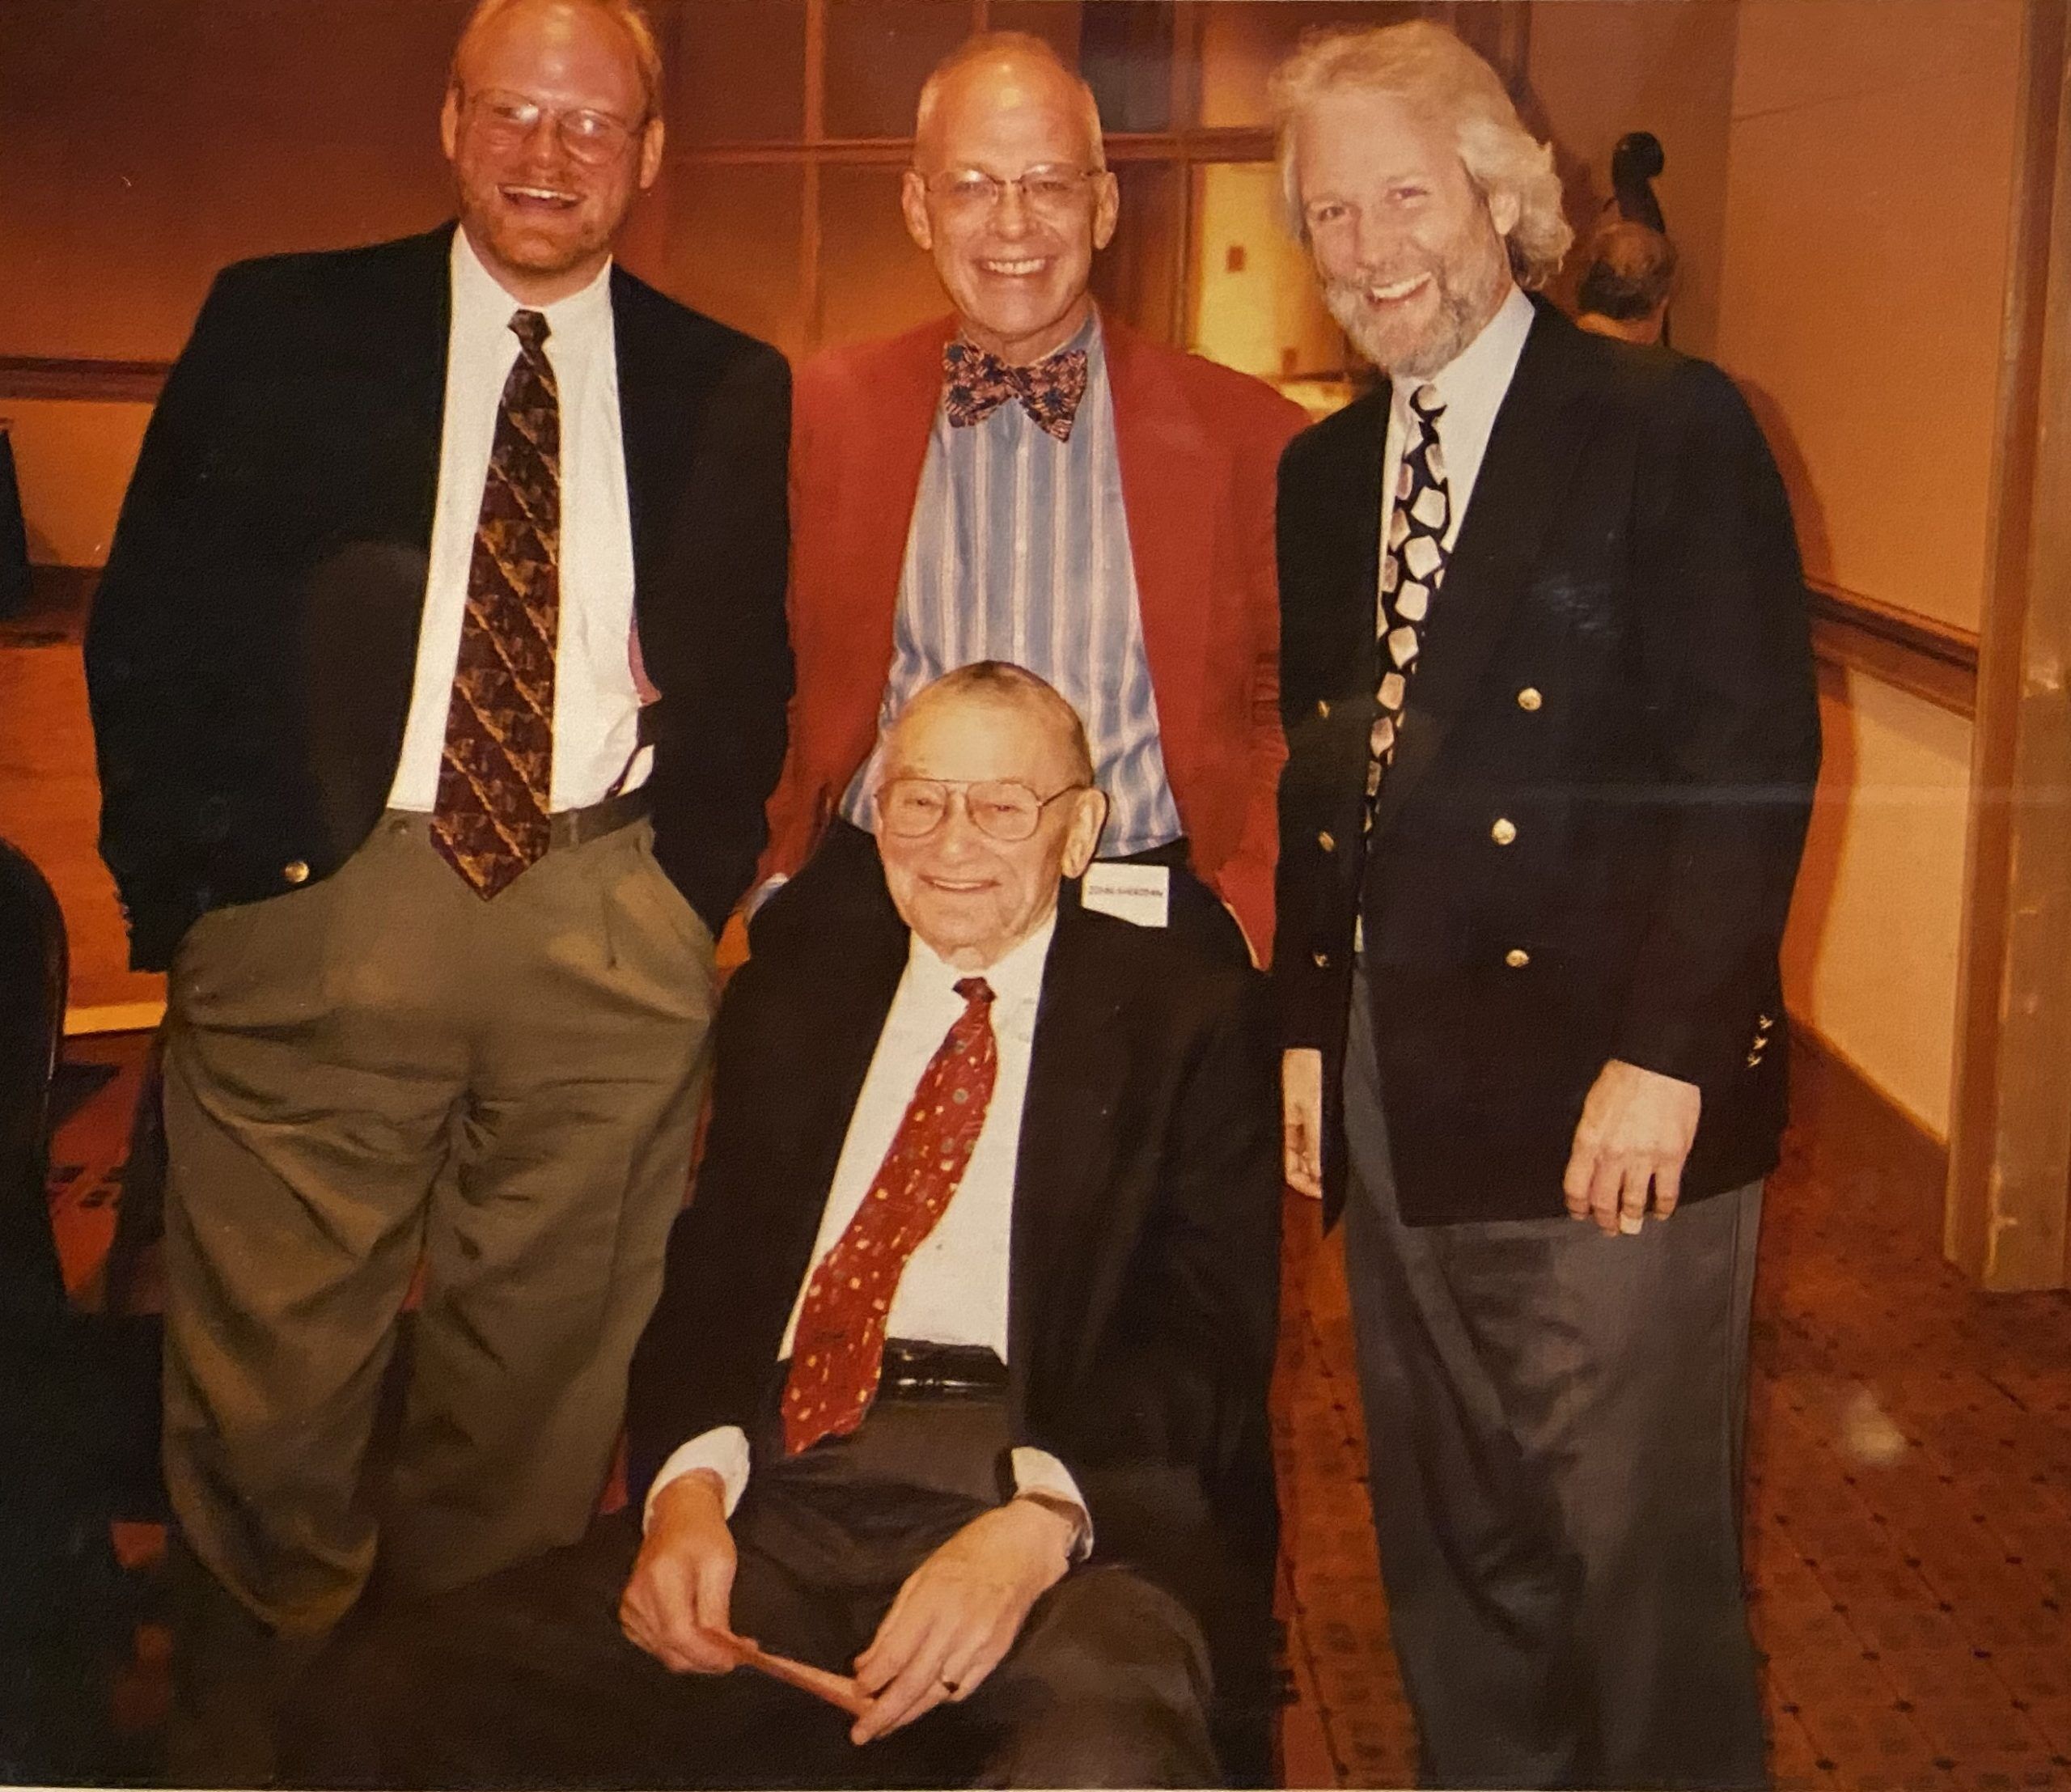 From left: Jeff Barnhart, John Sheridan, Hank Troy; seated: the great Ralph Sutton